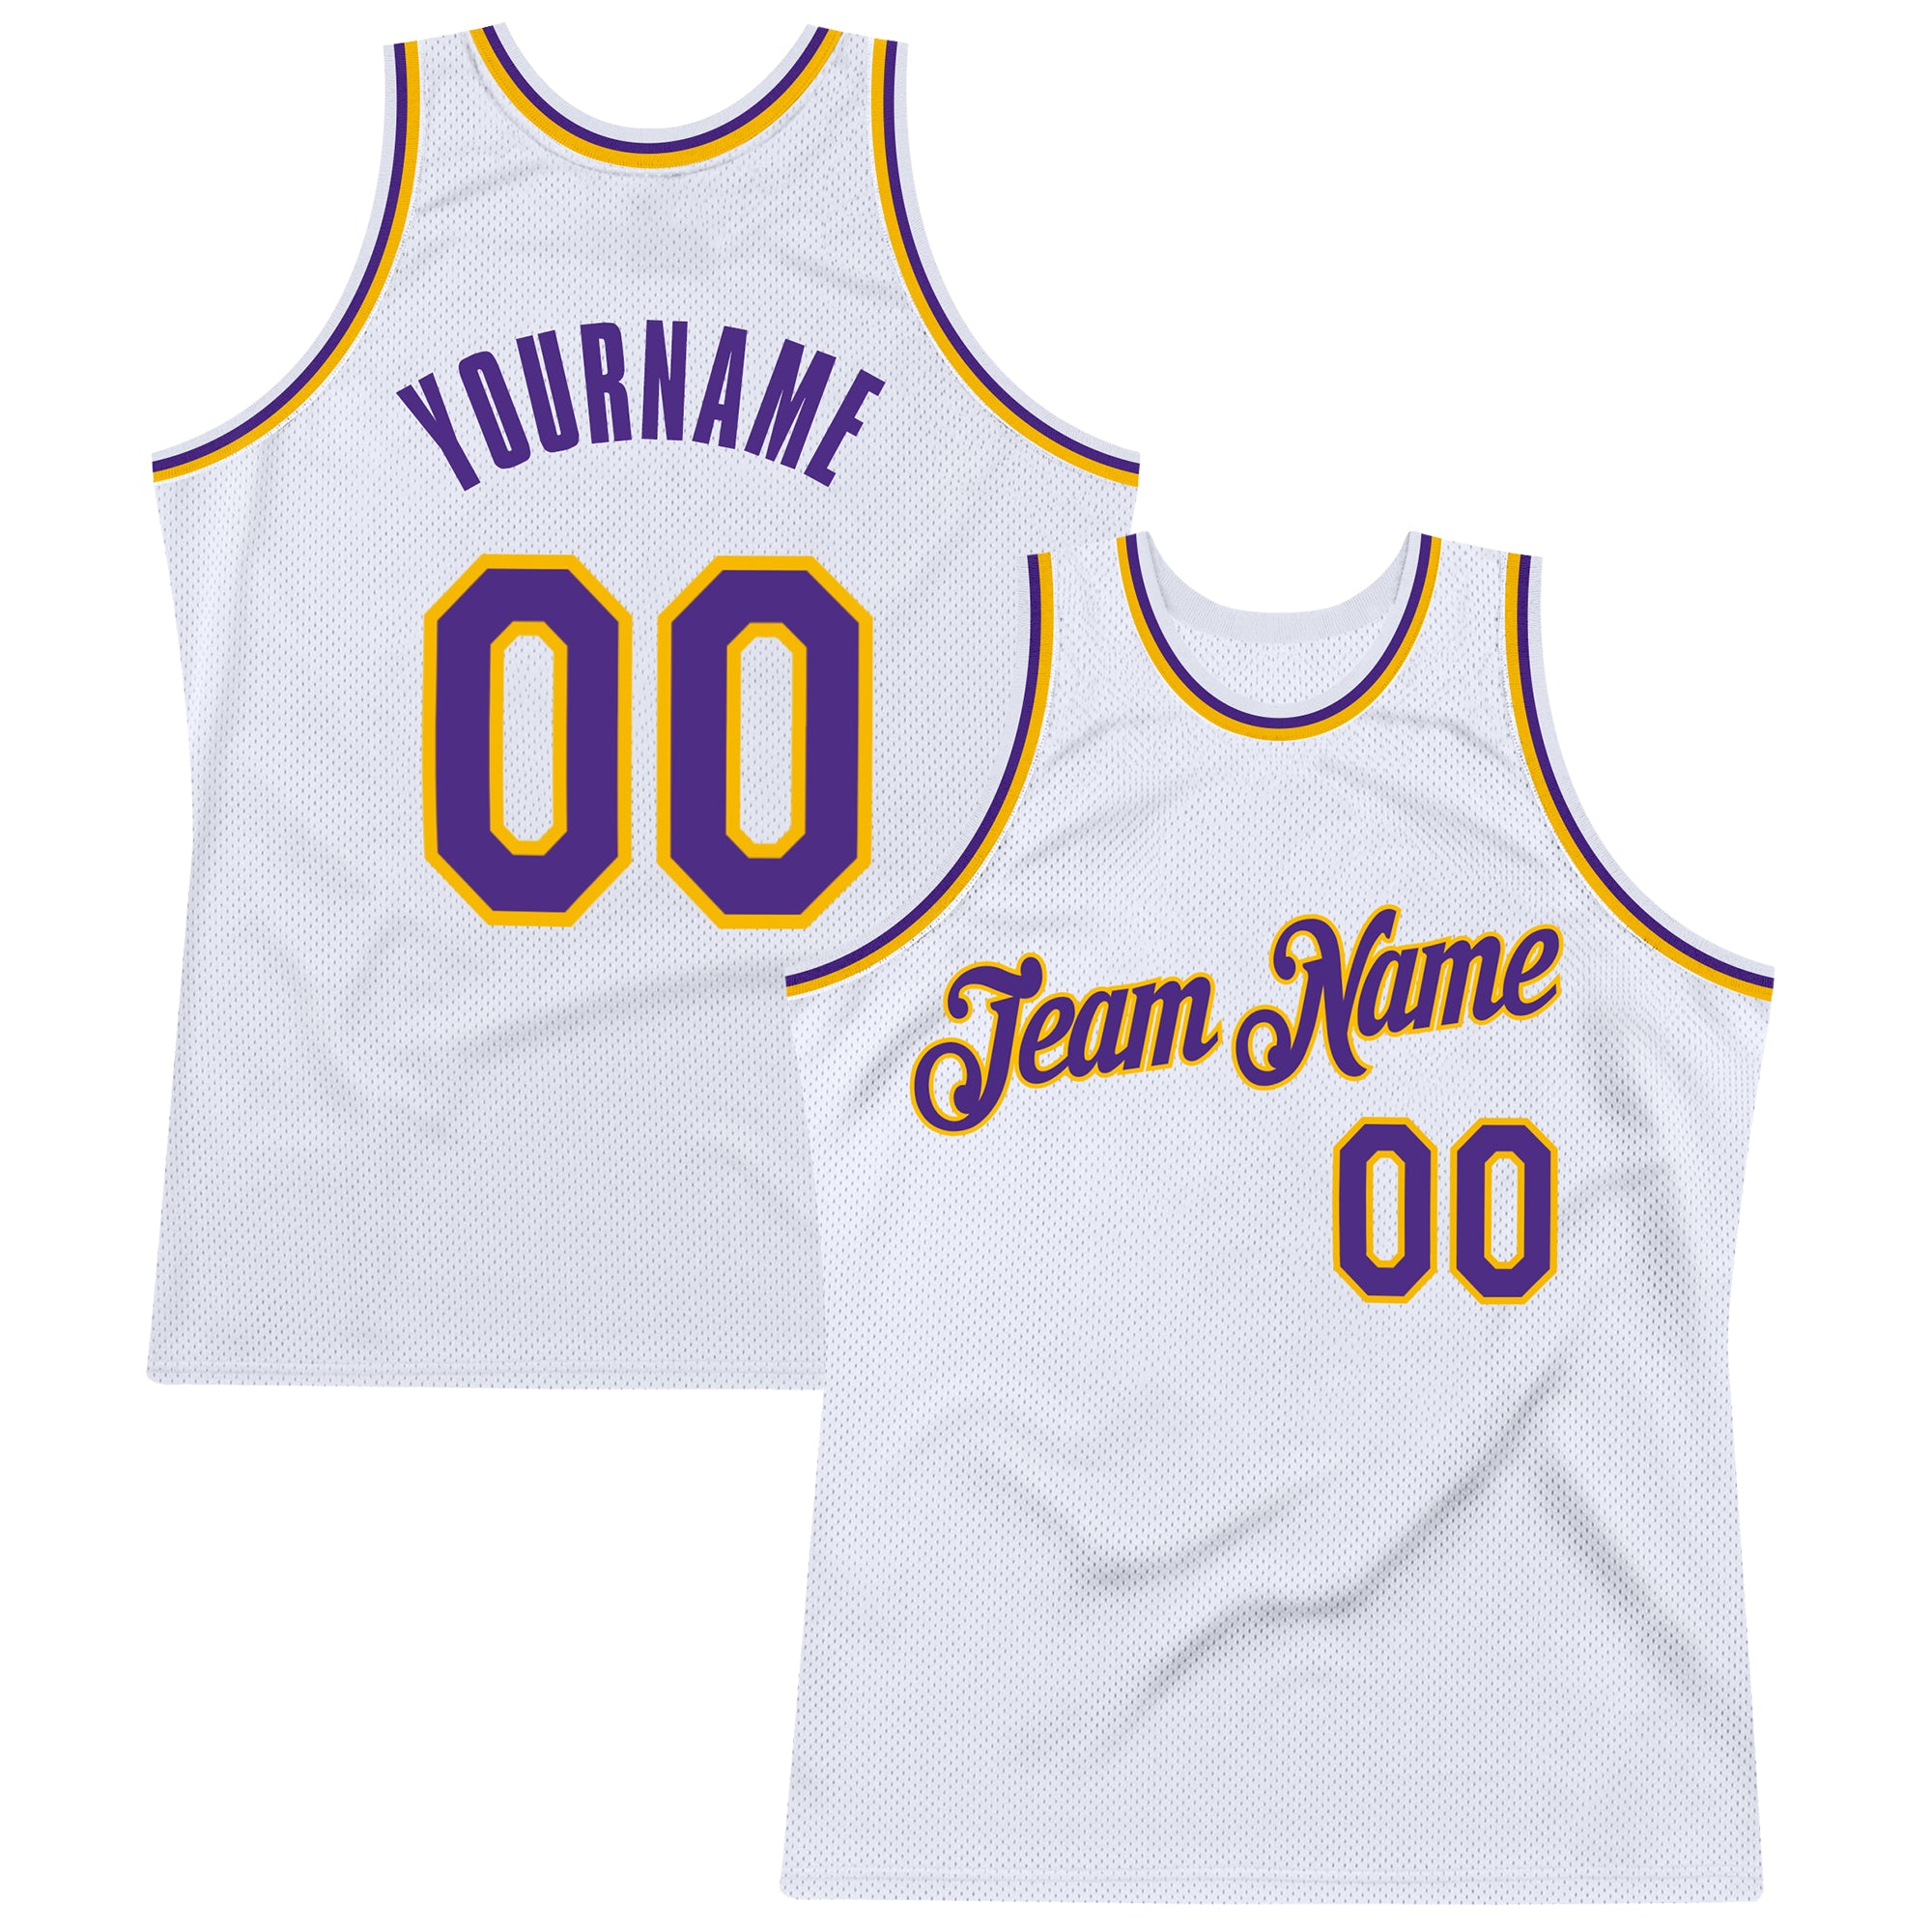 Lakers custom jersey